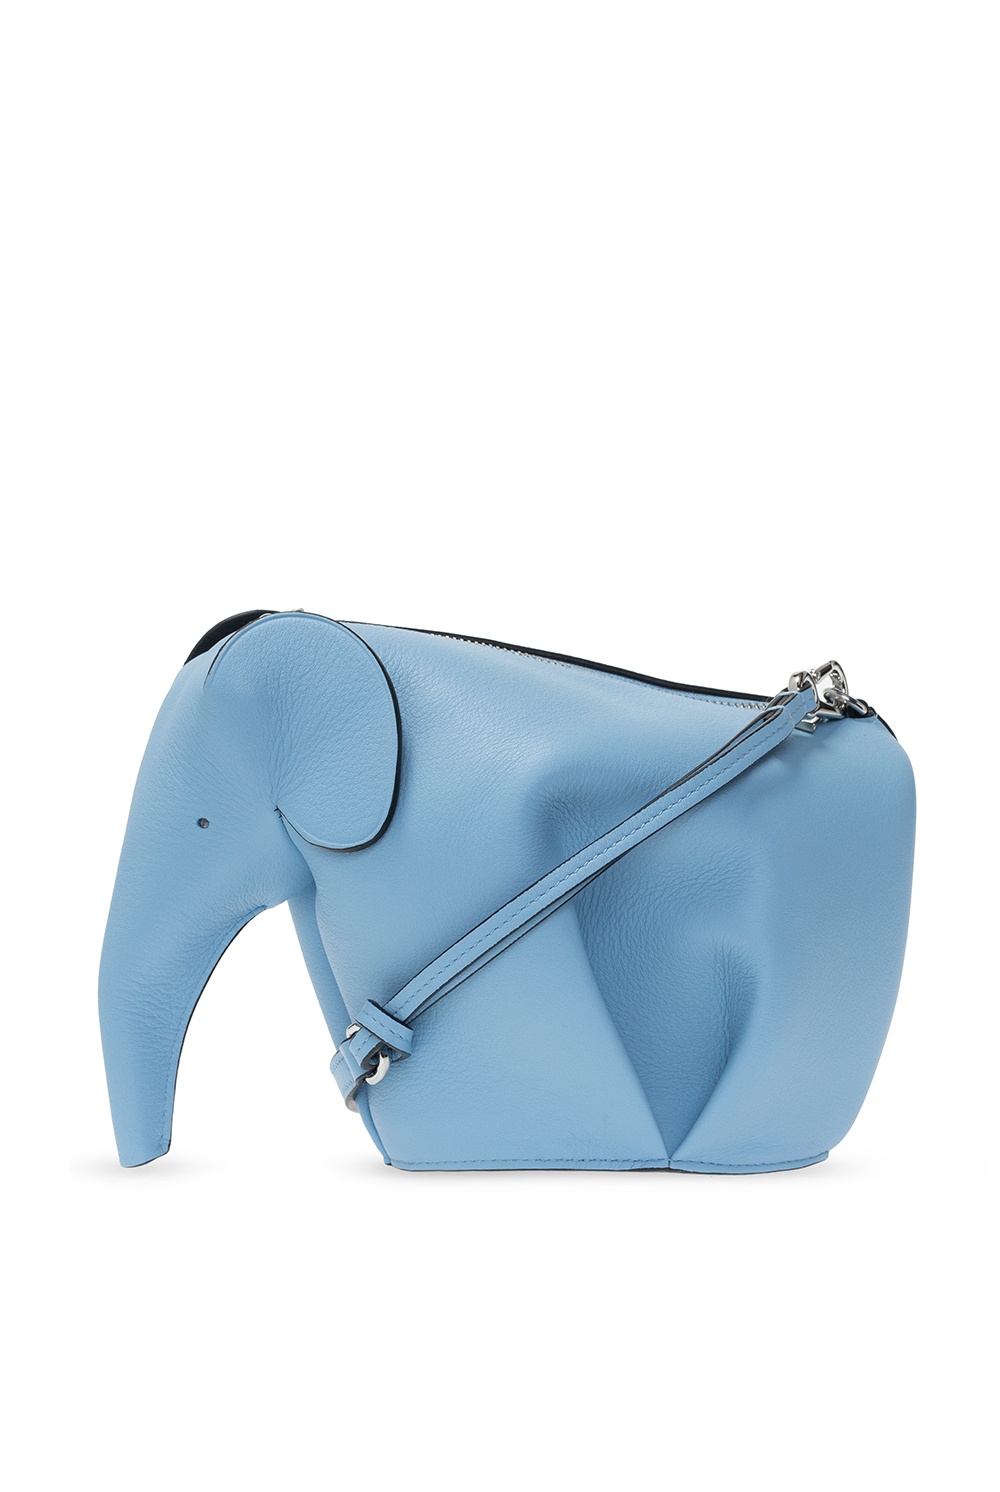 Loewe 'Elefante' shoulder | Women's | Vitkac